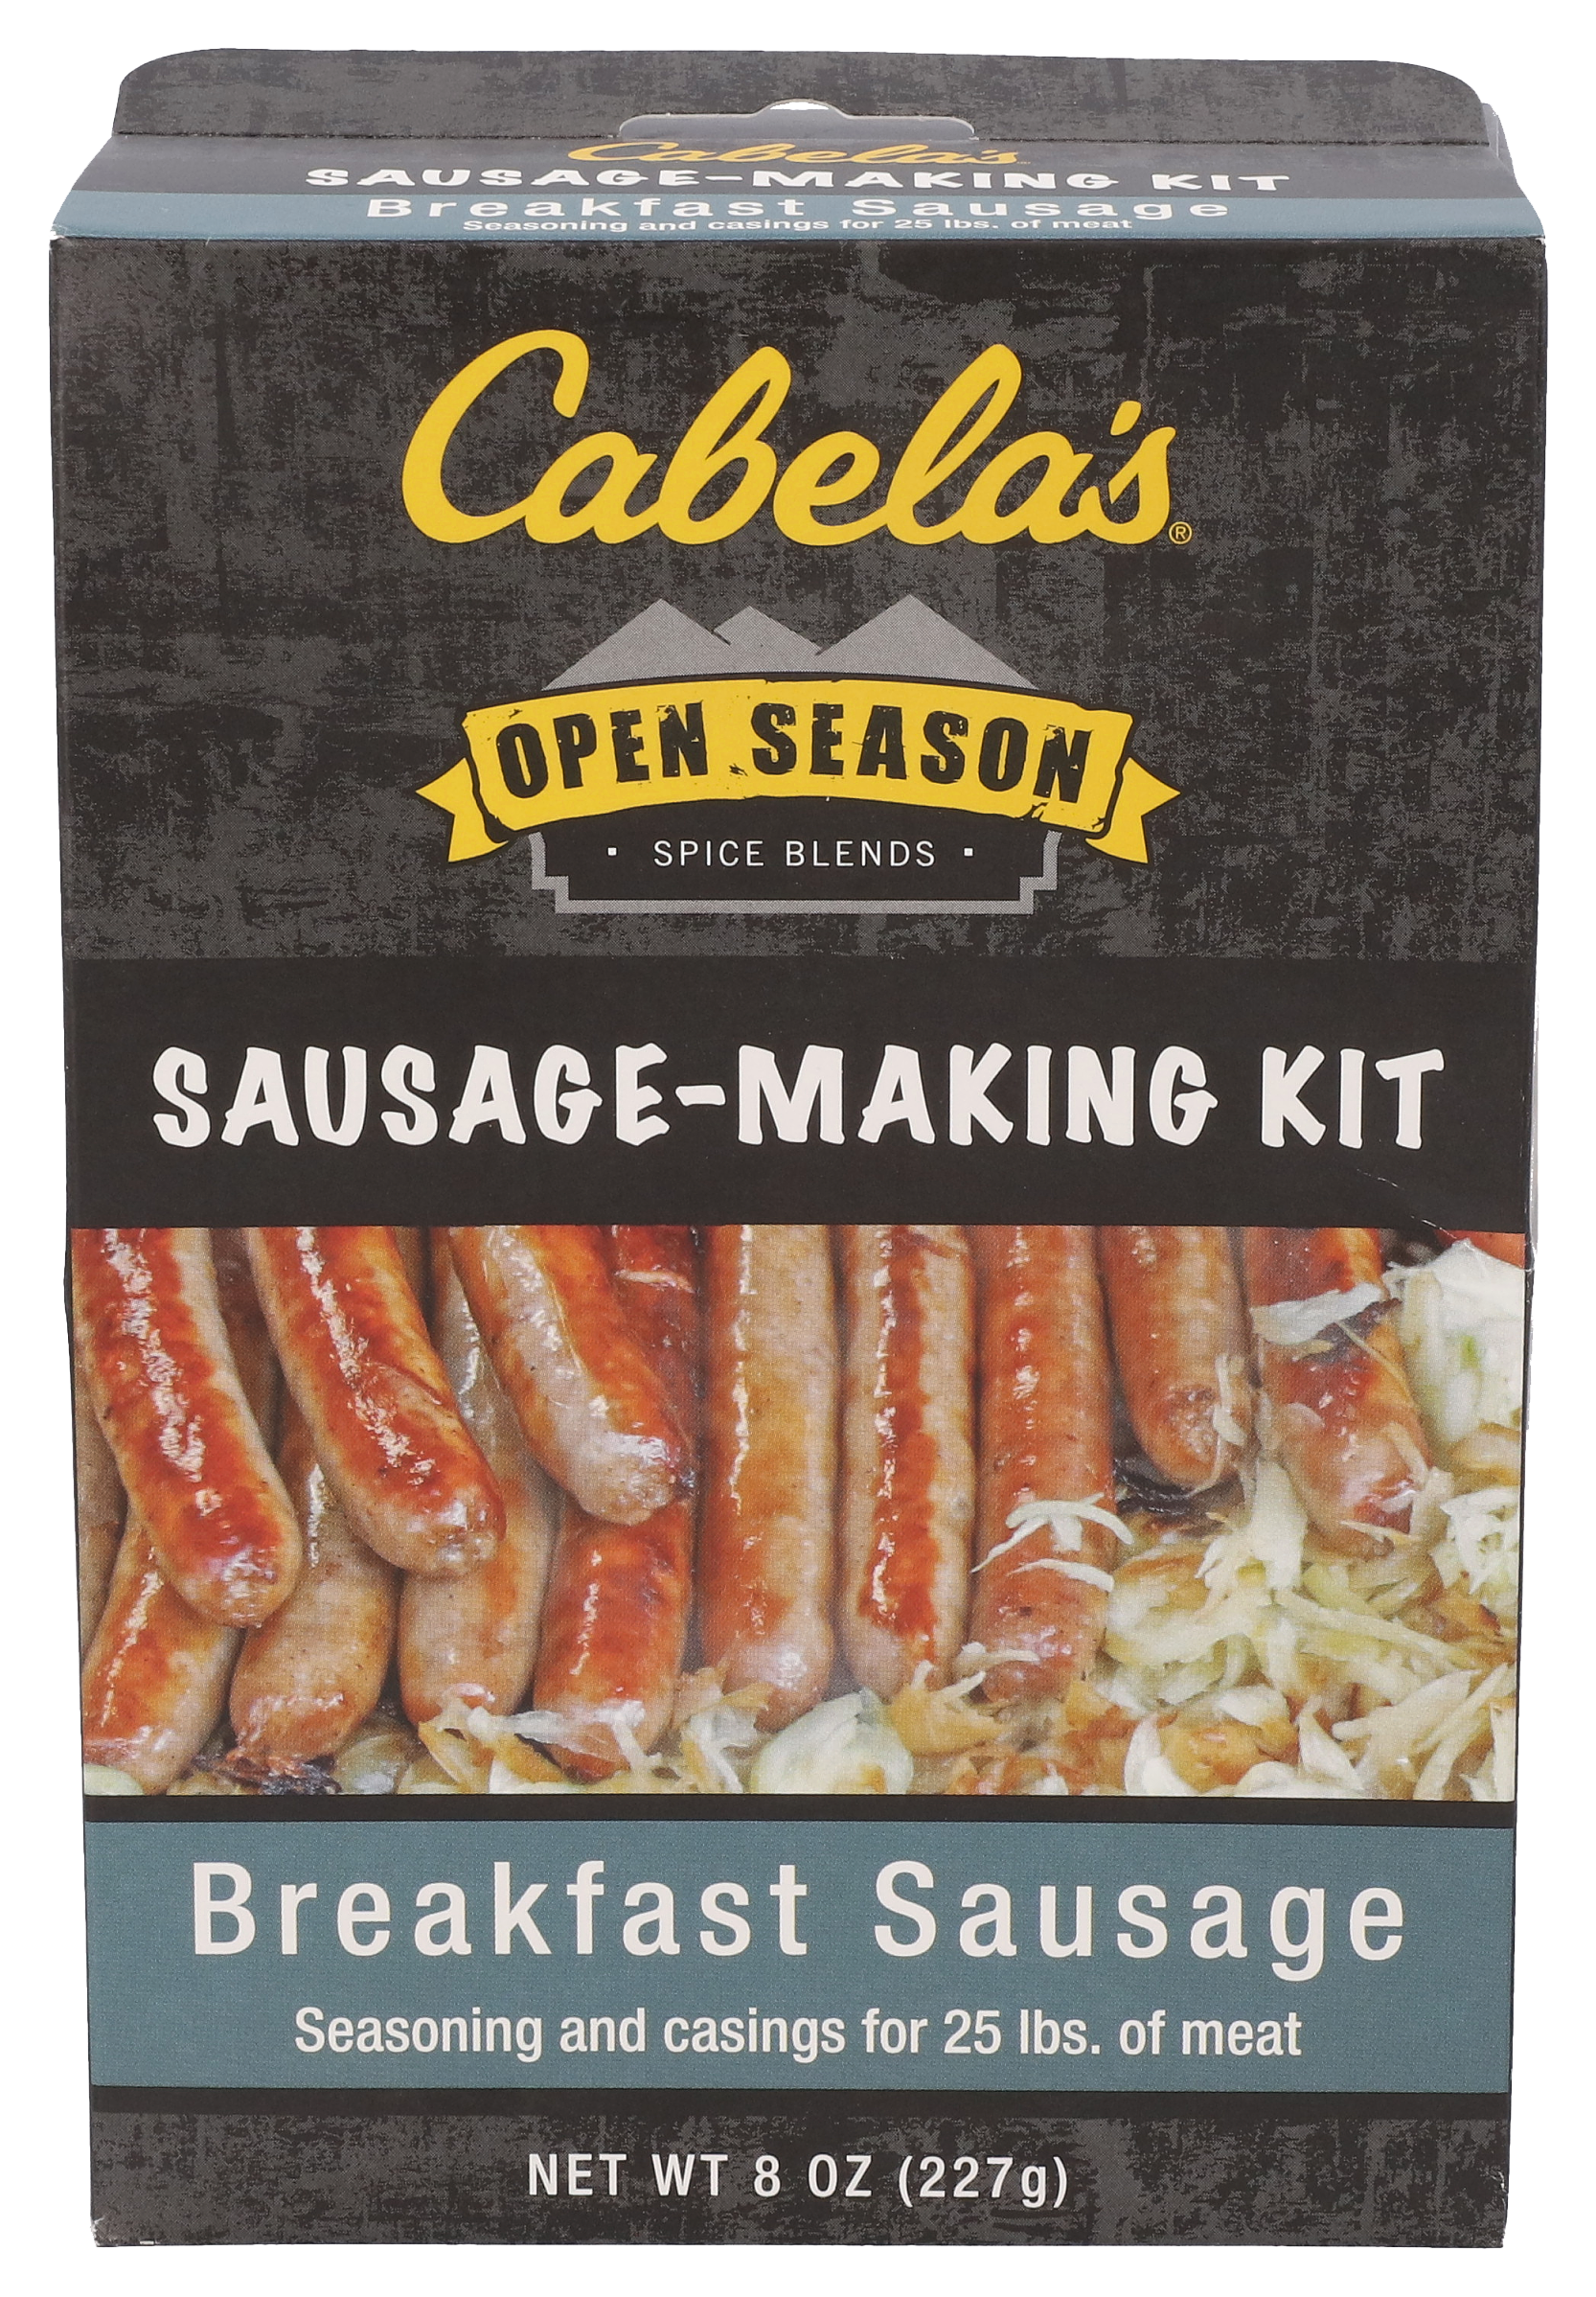 Skinless Breakfast Sausage Kit - The Sausage Maker